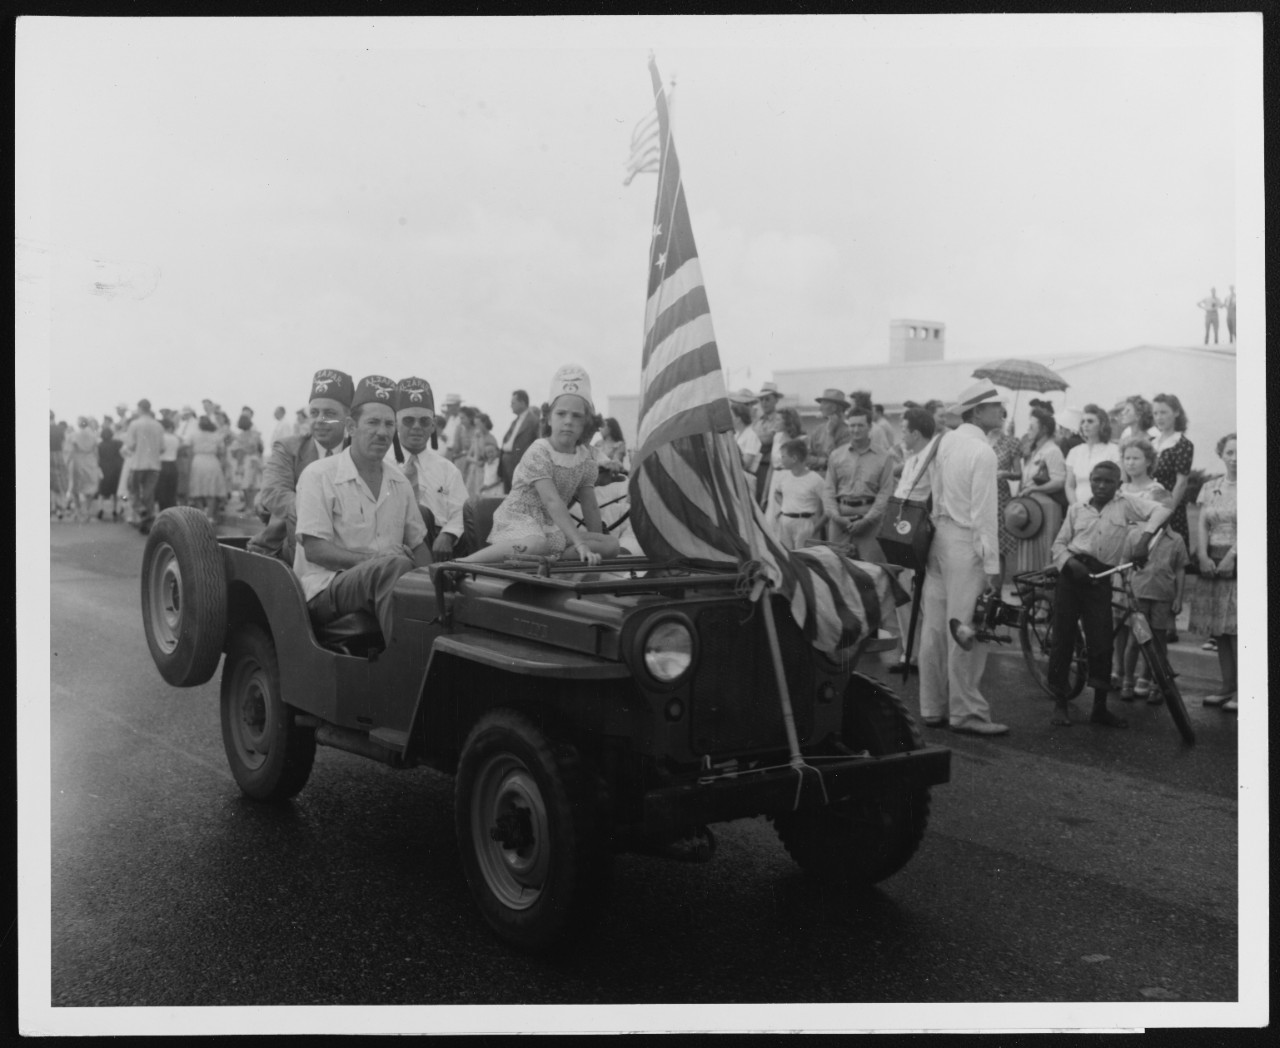 Local Organization Participates in "Nimitz Day" Parade